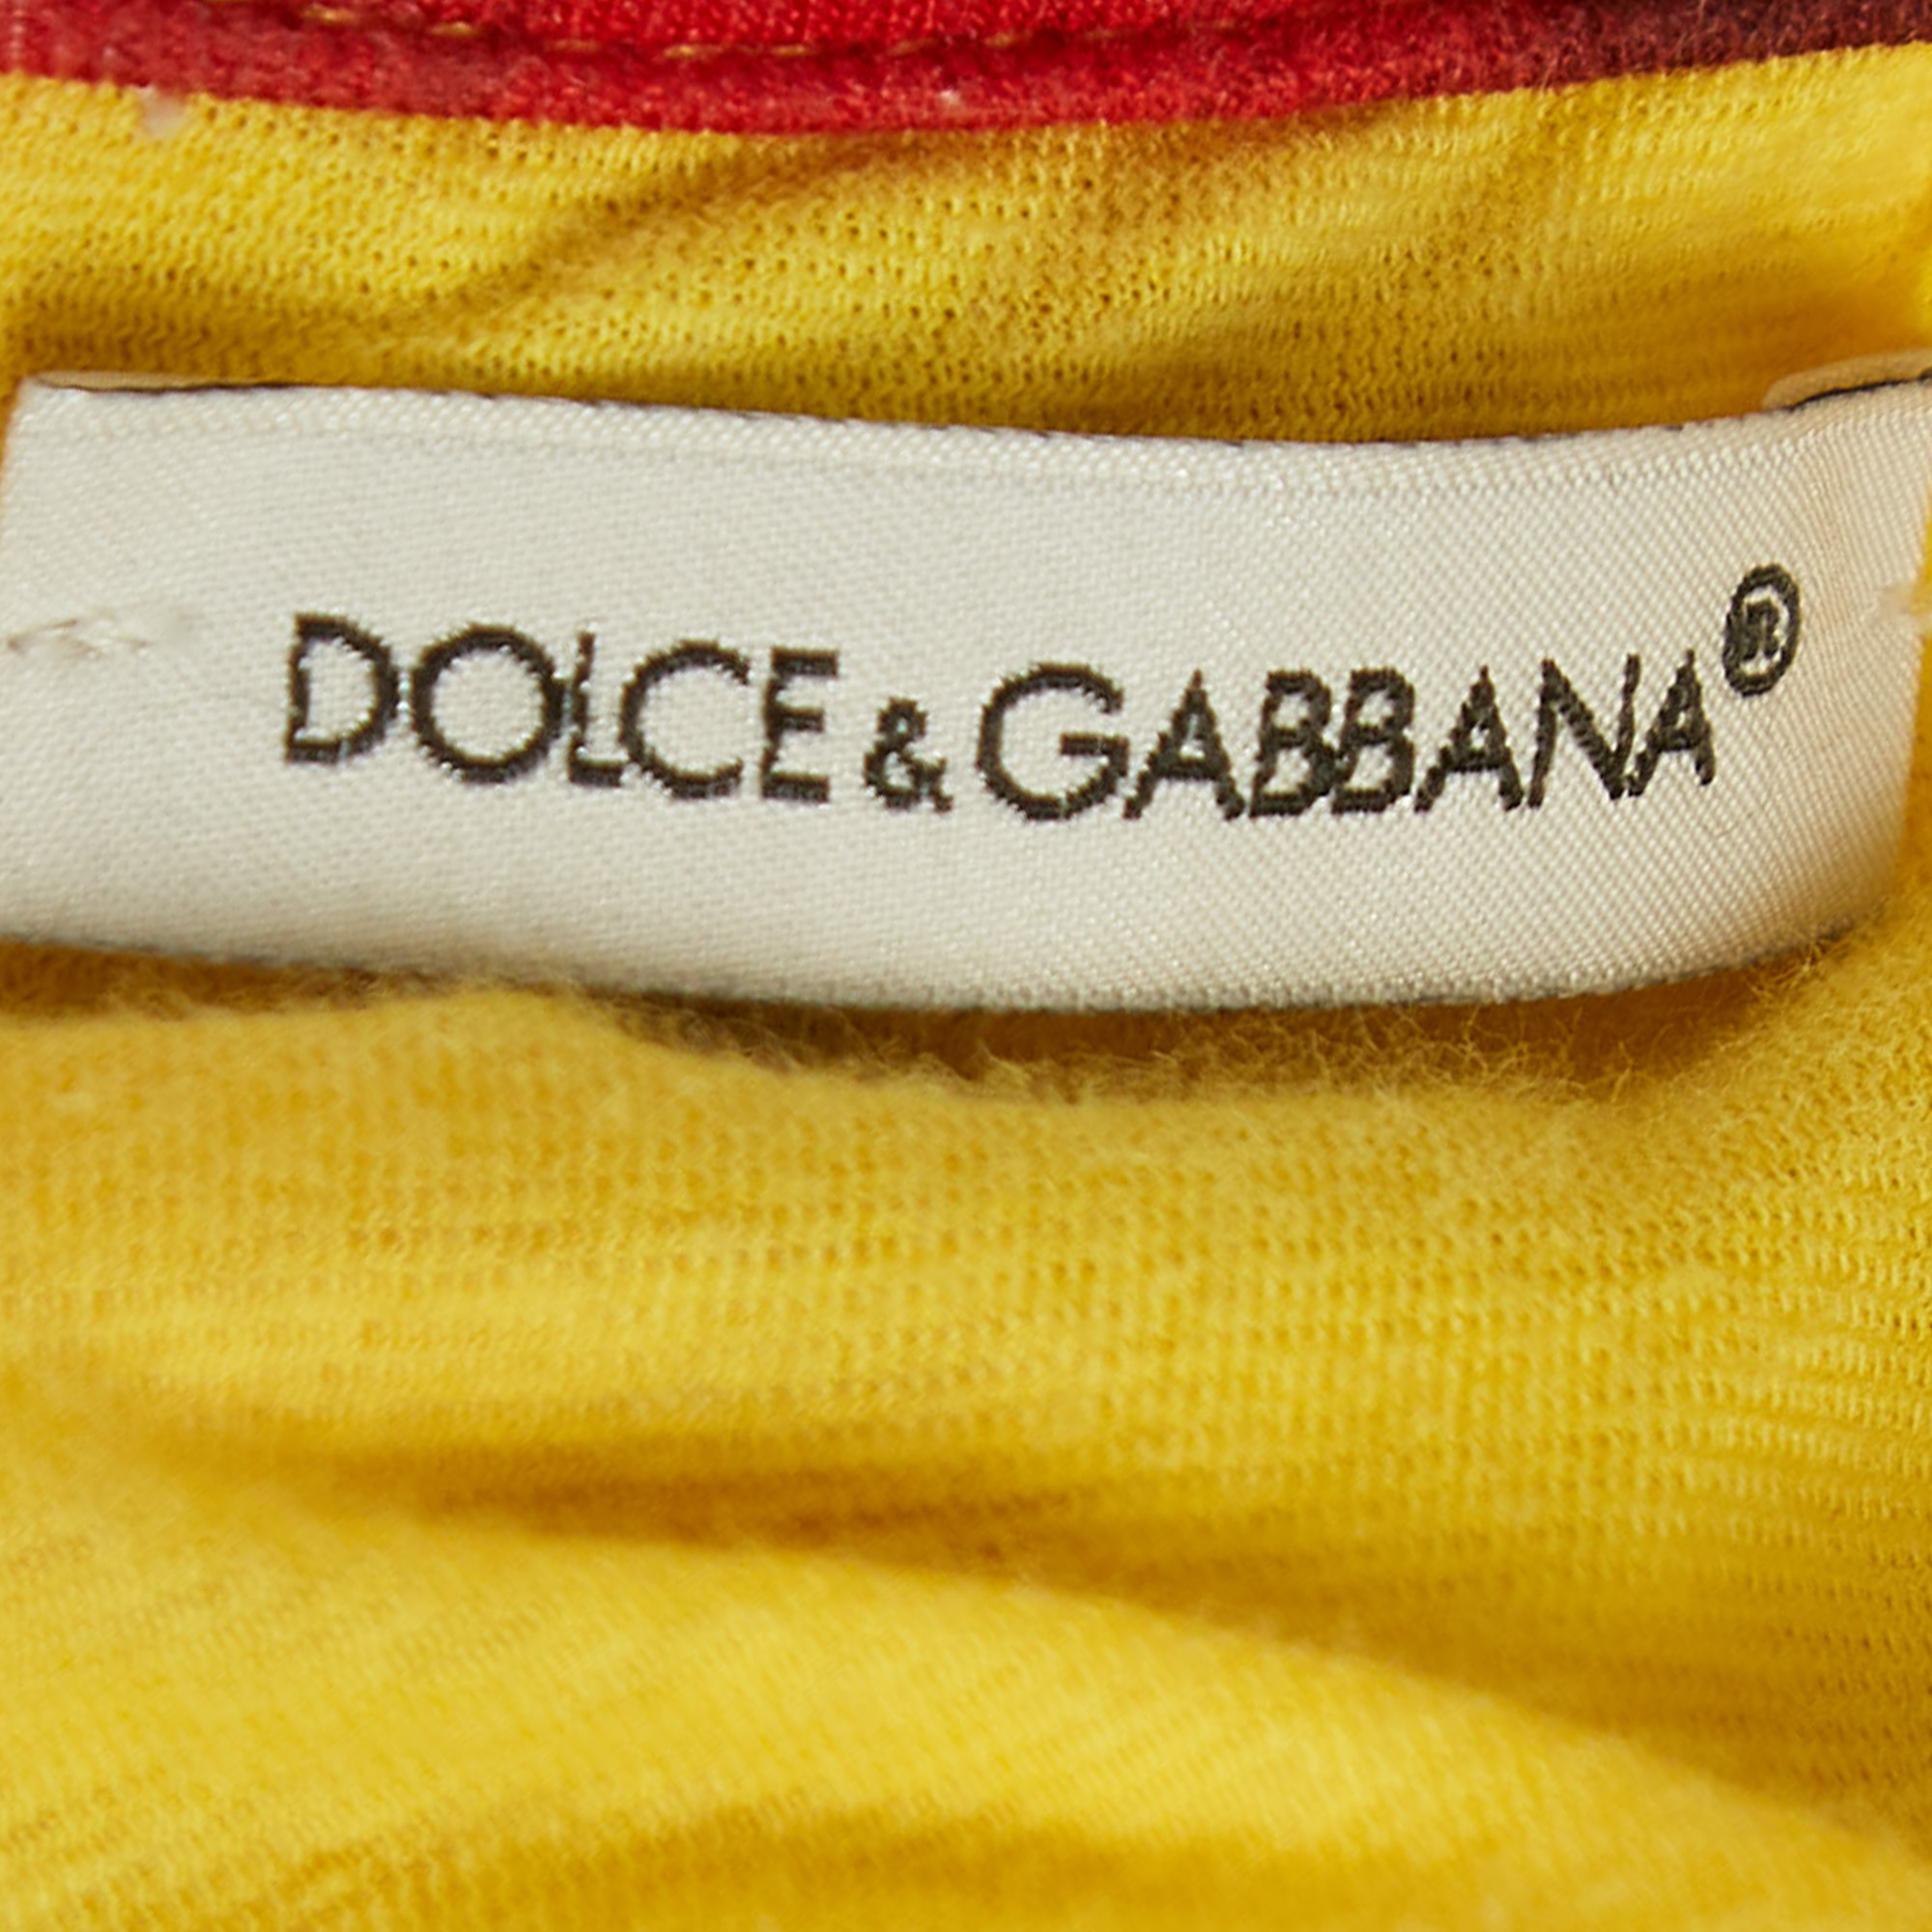 Dolce & Gabbana Yellow Floral Printed Jersey Dress (11-12 Yrs)